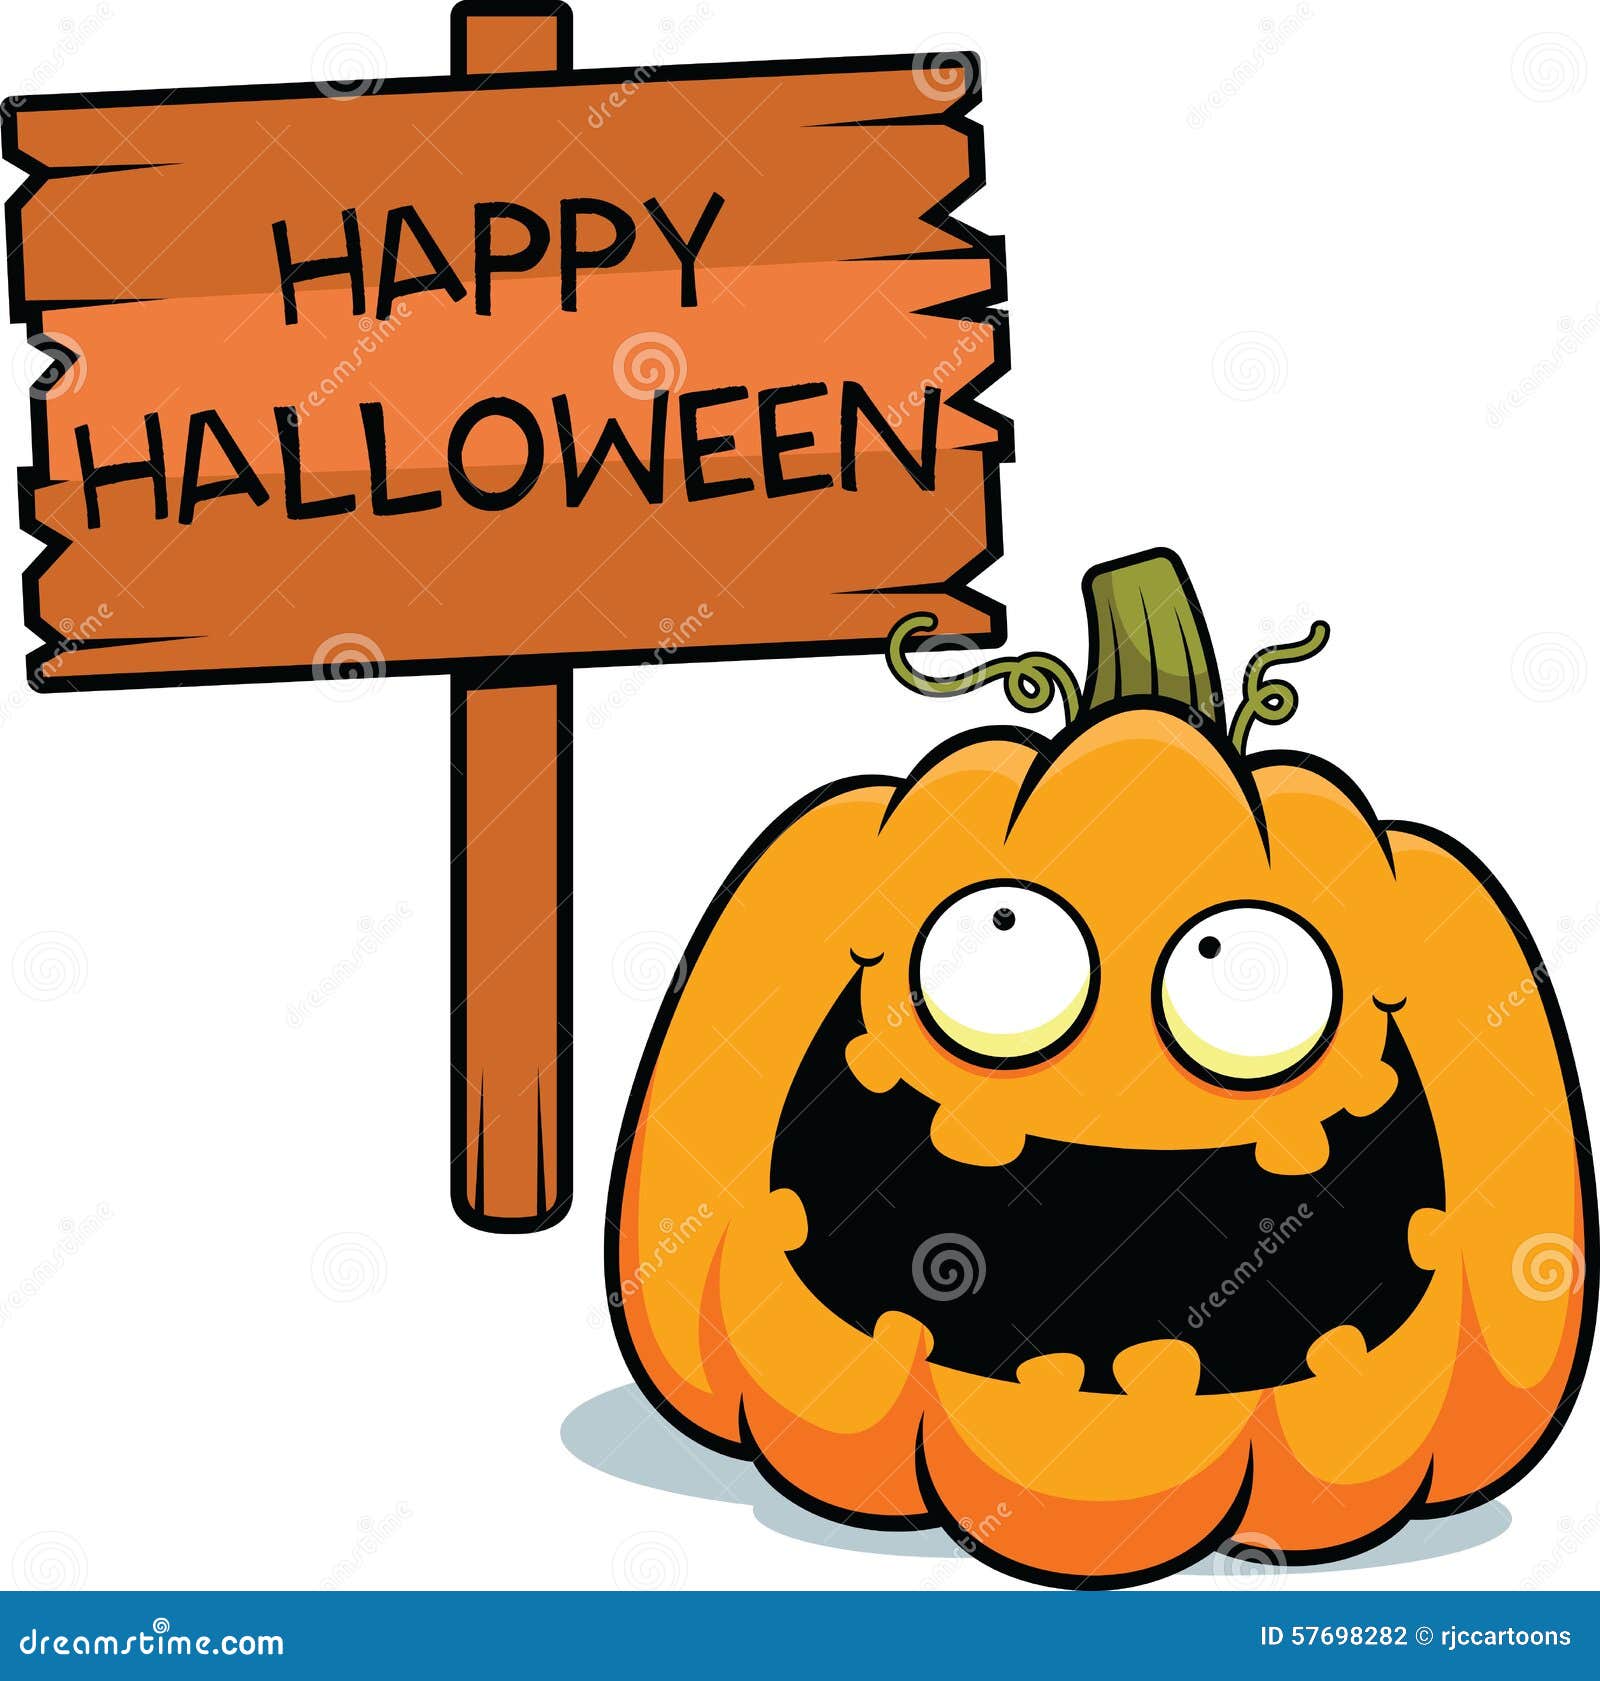 Cartoon Pumpkin Happy Halloween Stock Vector - Illustration of holiday,  decoration: 57698282